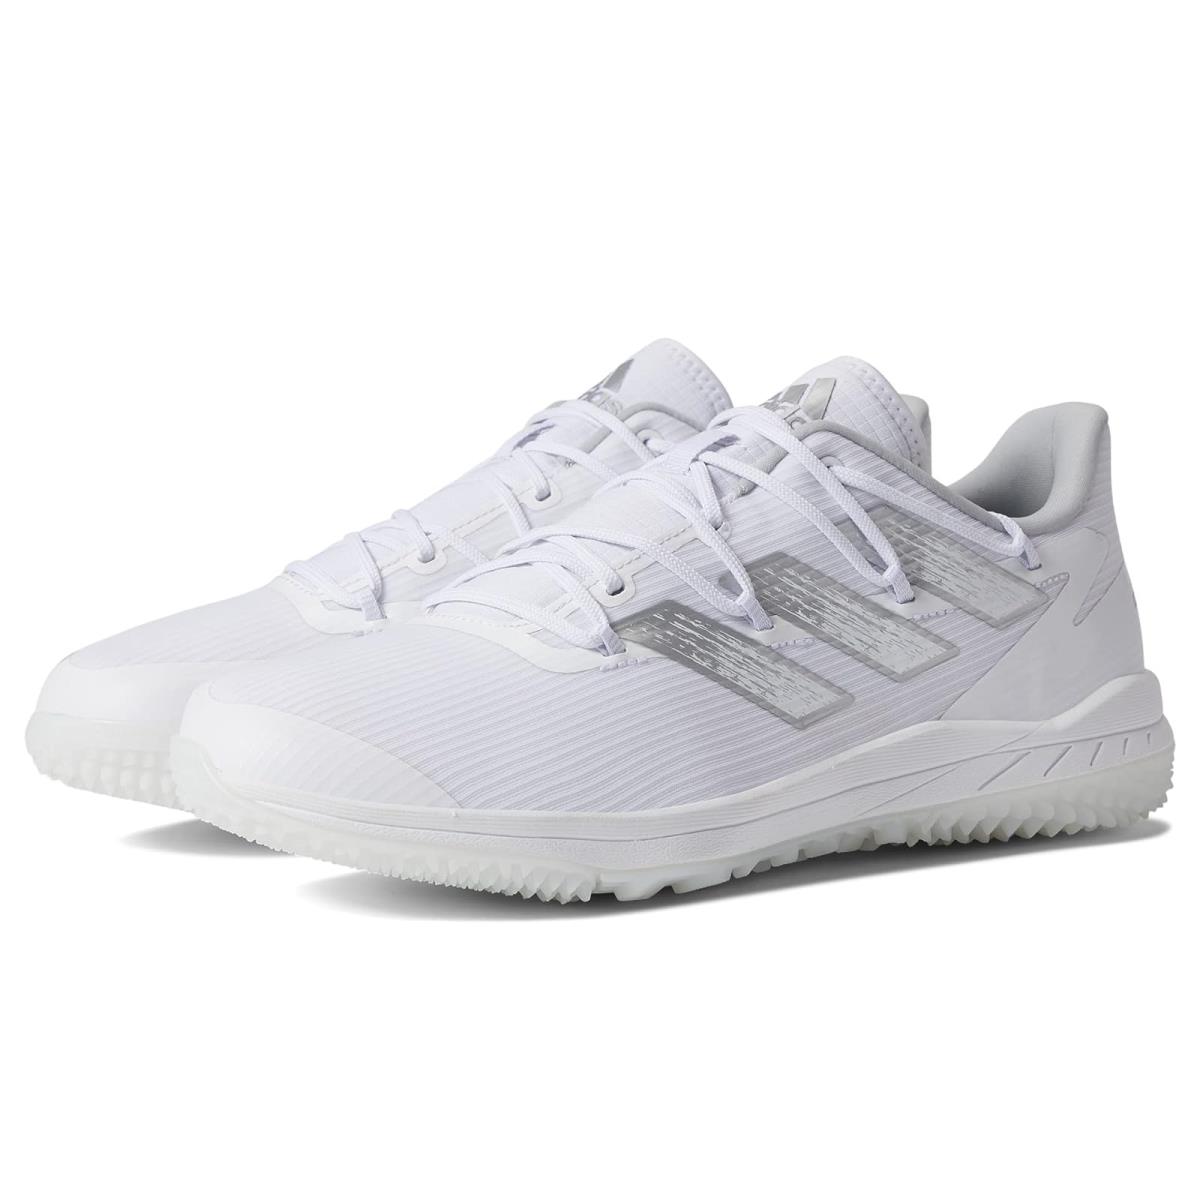 Man`s Shoes Adidas Adizero Afterburner 8 Turf Baseball Cleats White/Silver Metallic/Team Light Grey